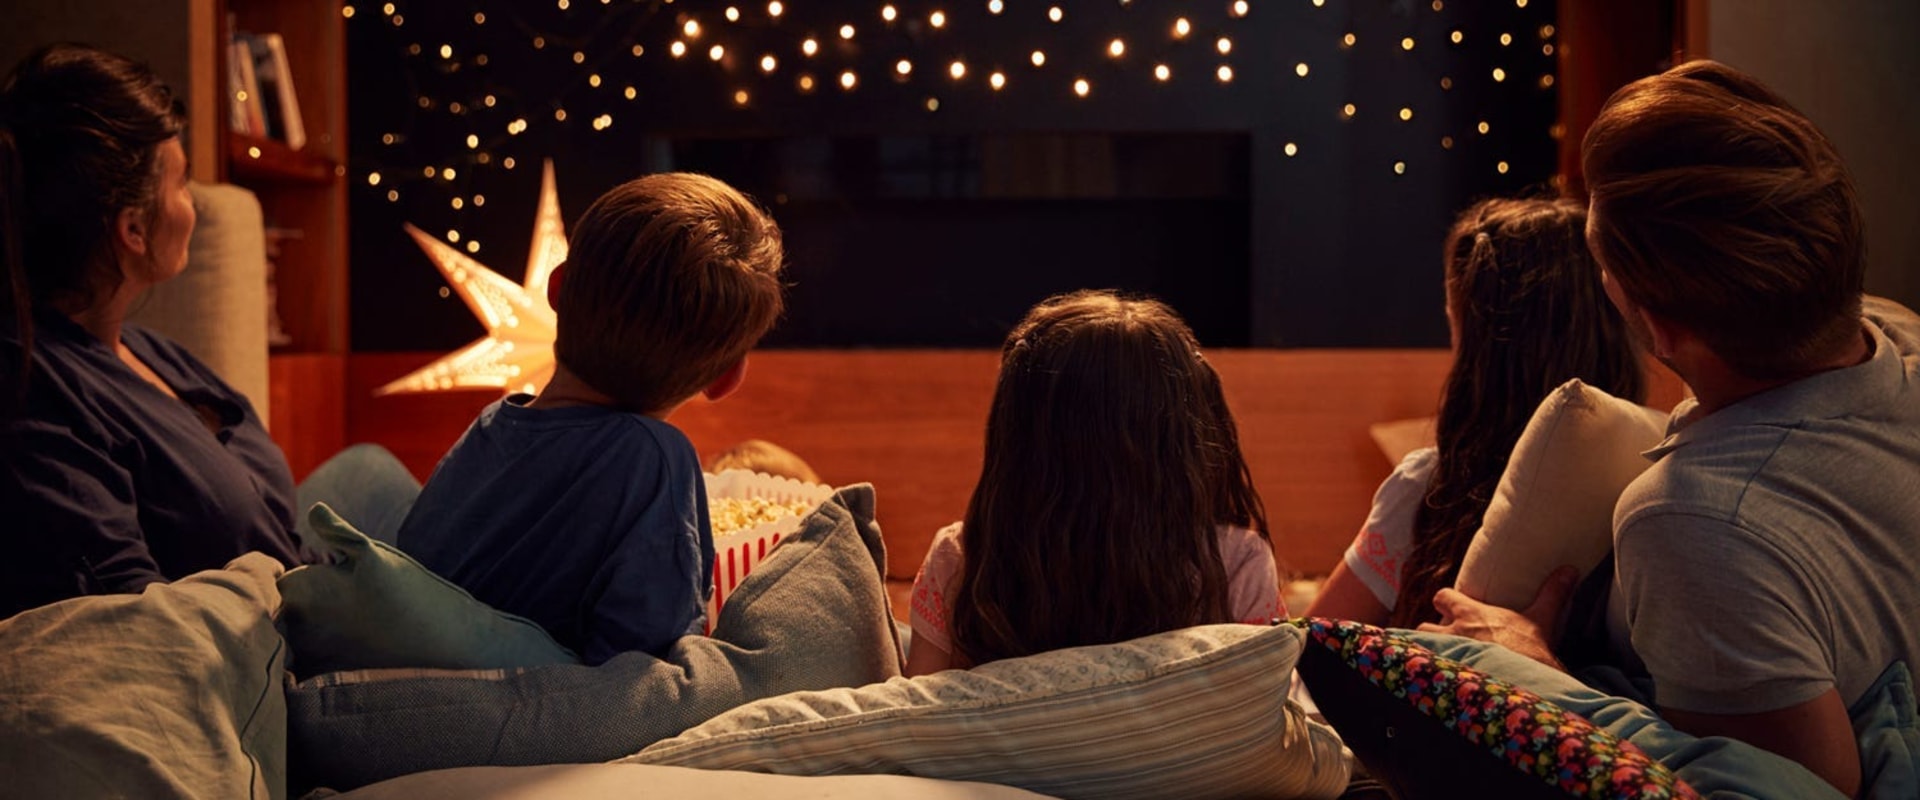 Movie Nights - A Fun and Enjoyable Indoor Activity Idea